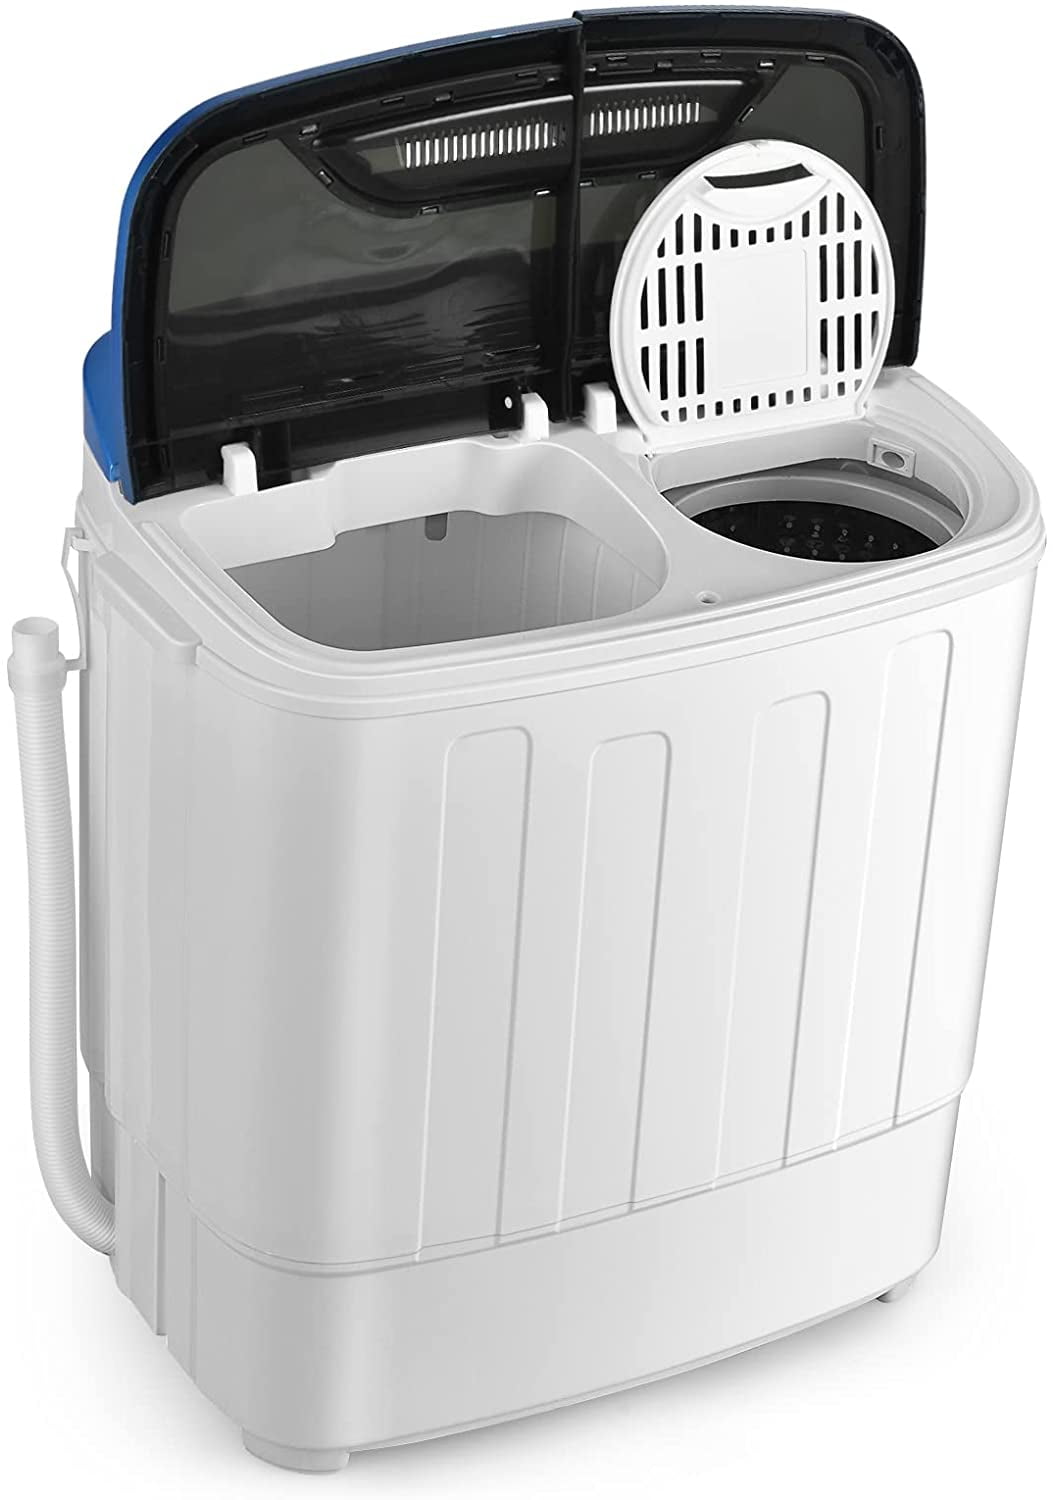 infinintexiii  Portable washer and dryer, Mini washer and dryer, Small  washer and dryer